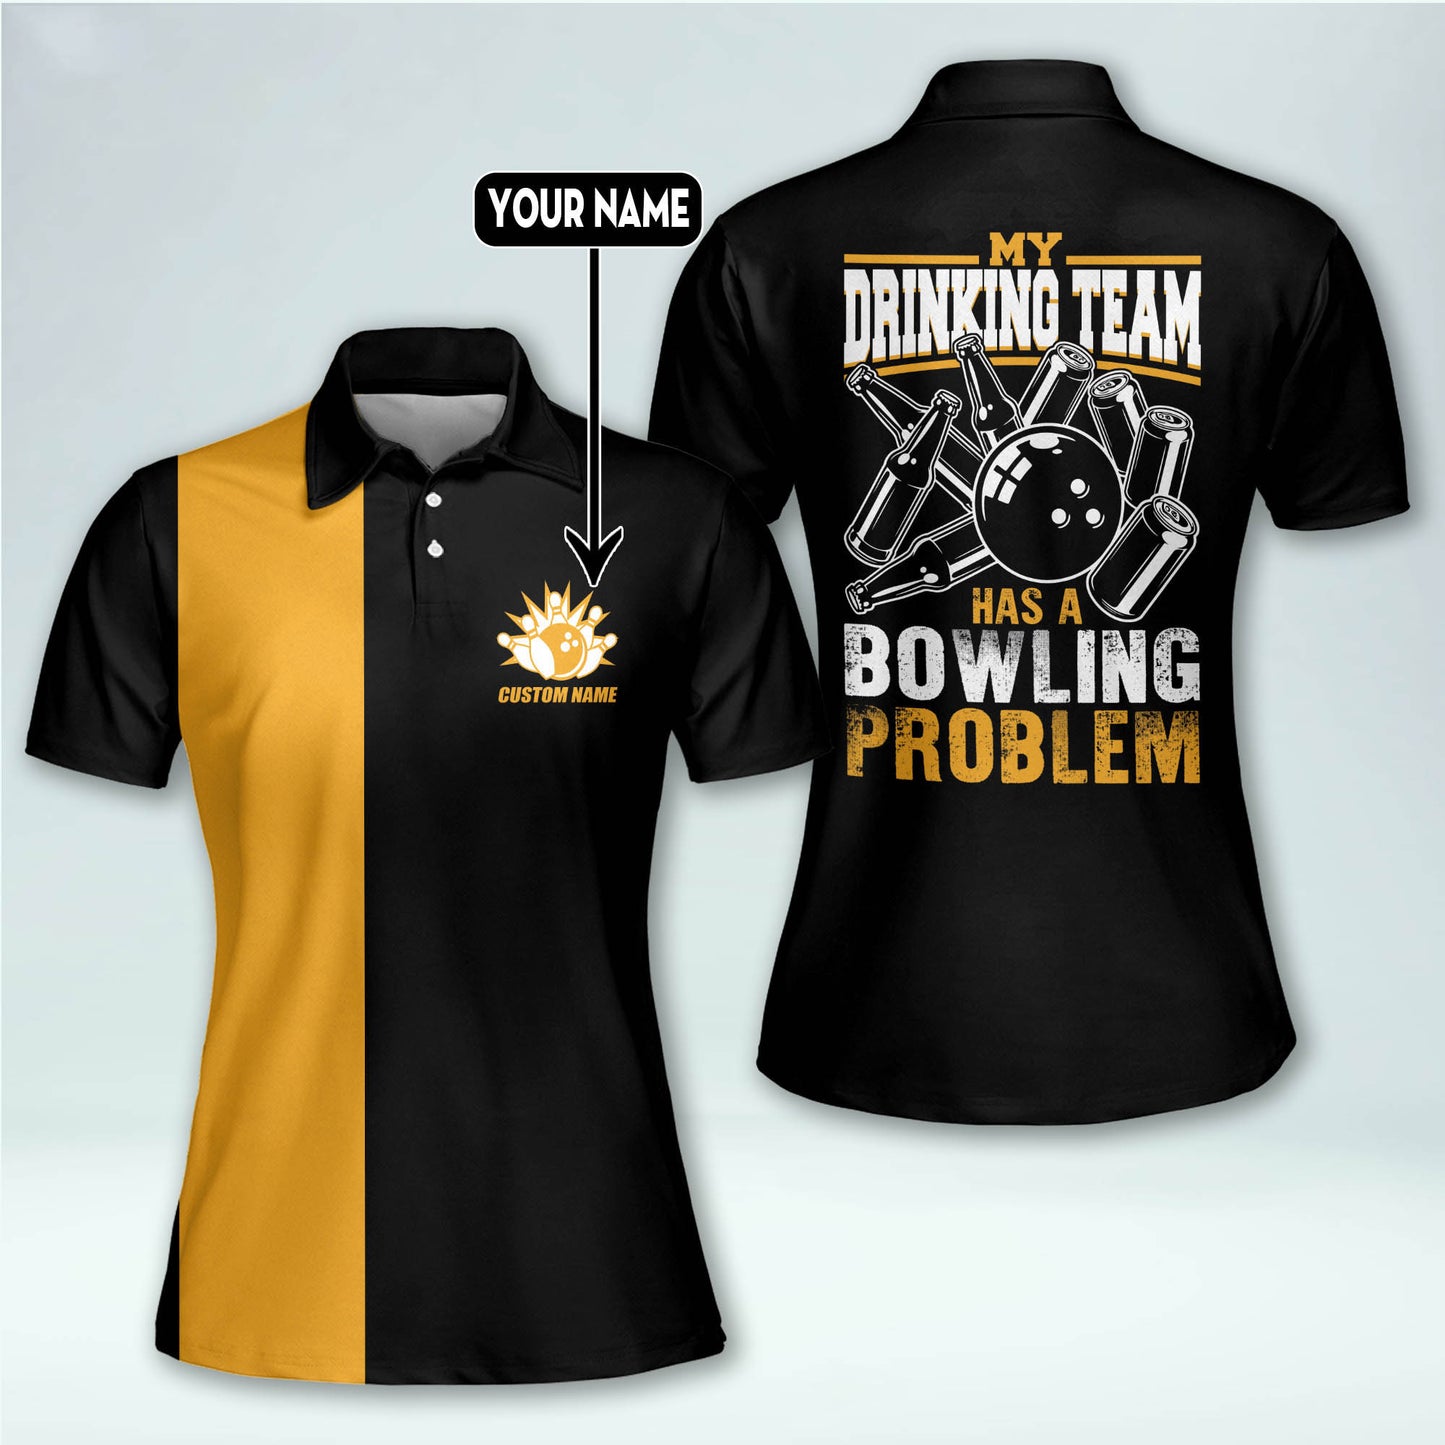 Has A Bowling Problem Shirts Women BW0112